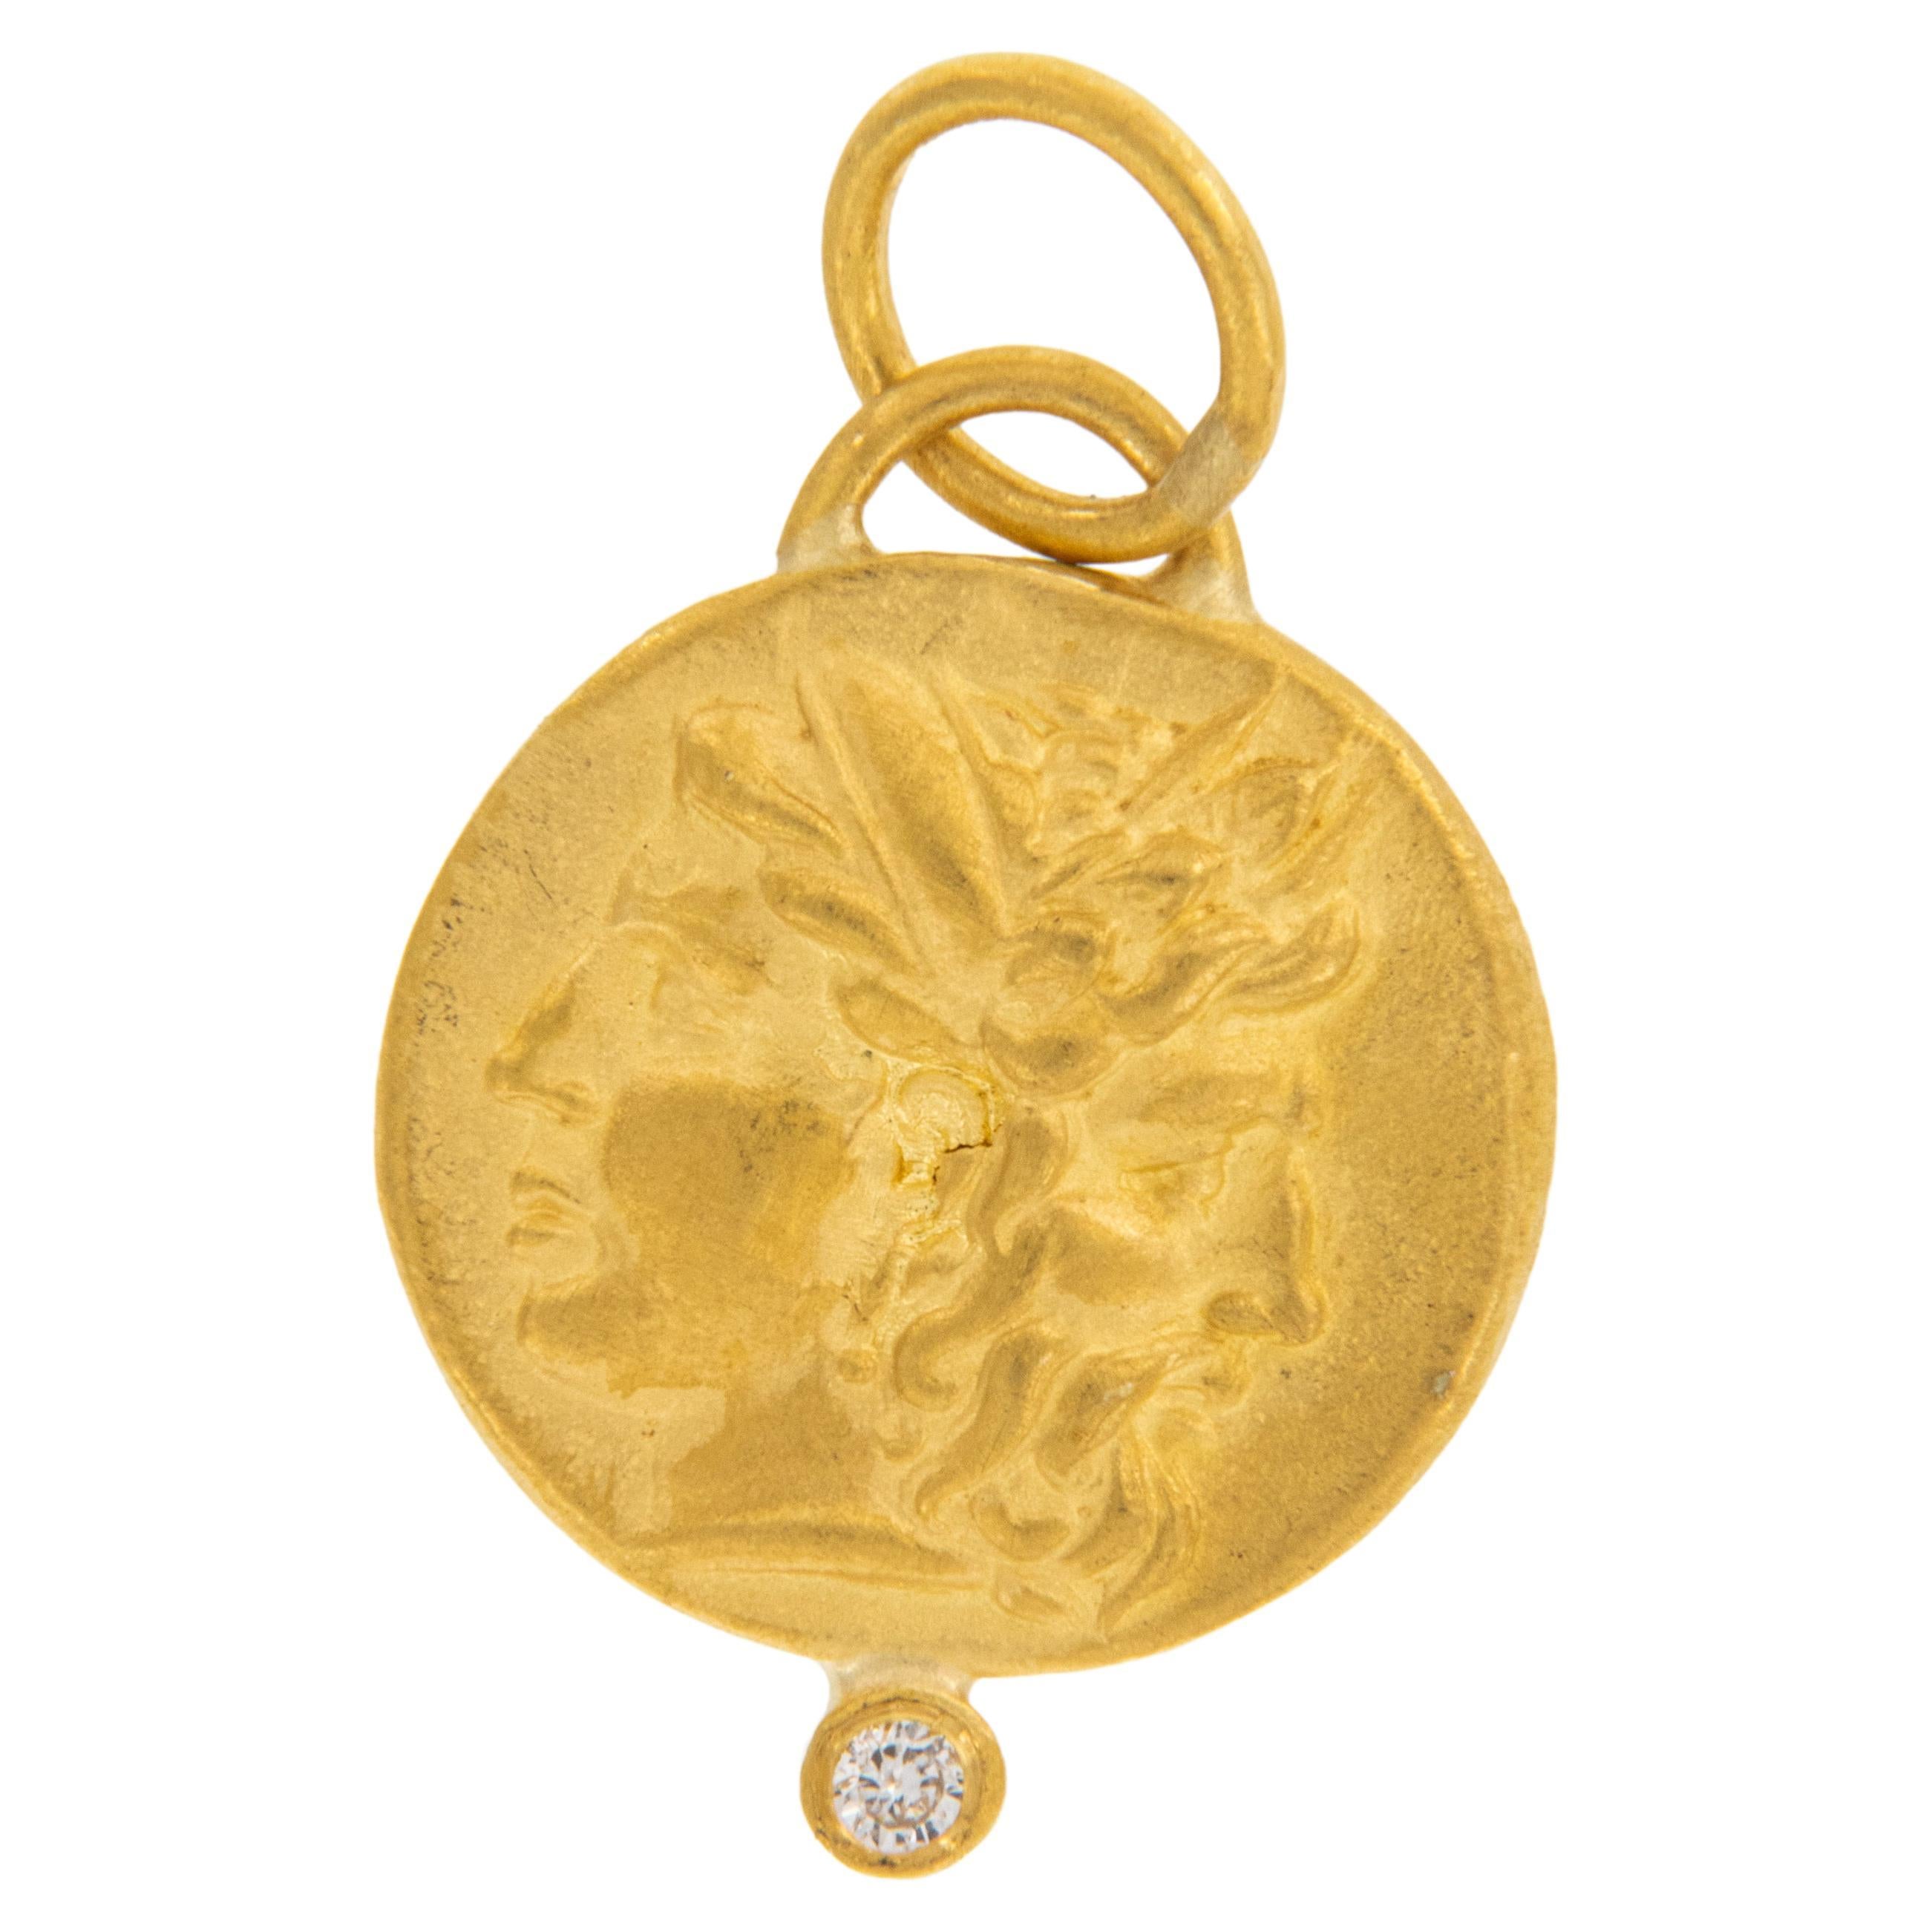 24 Karat Gold  Reproduction Janus Double Headed Coin Pendant Charm with Diamond